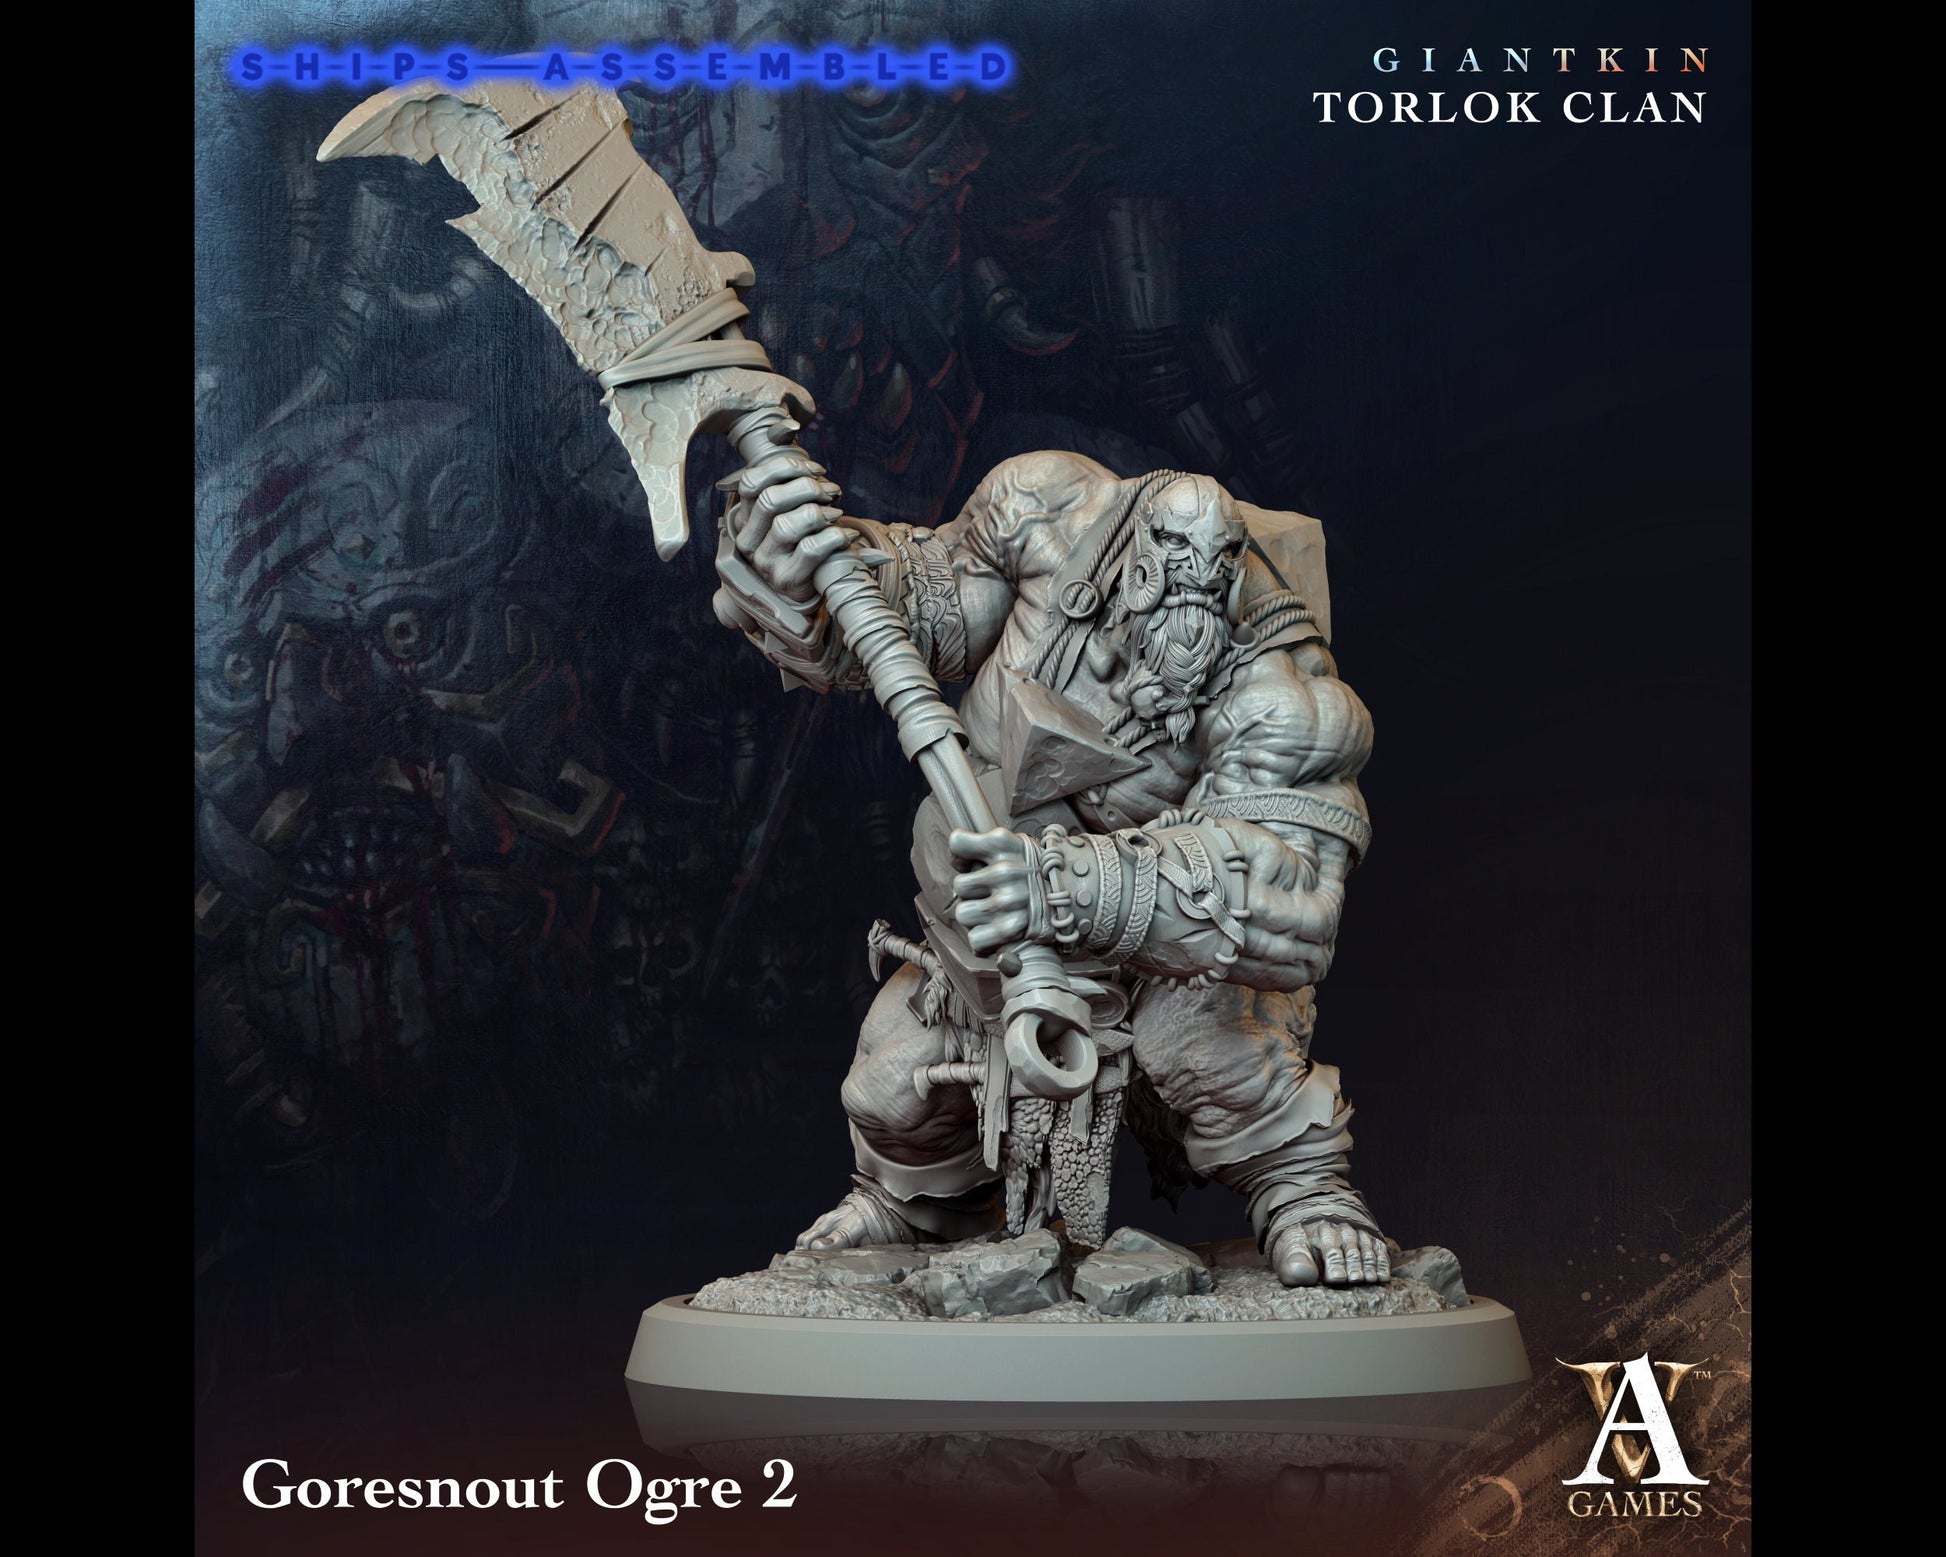 Goresnout Ogre 2 - Giant Kin, Torlock Clan- Highly Detailed Resin 8k 3D Printed Miniature